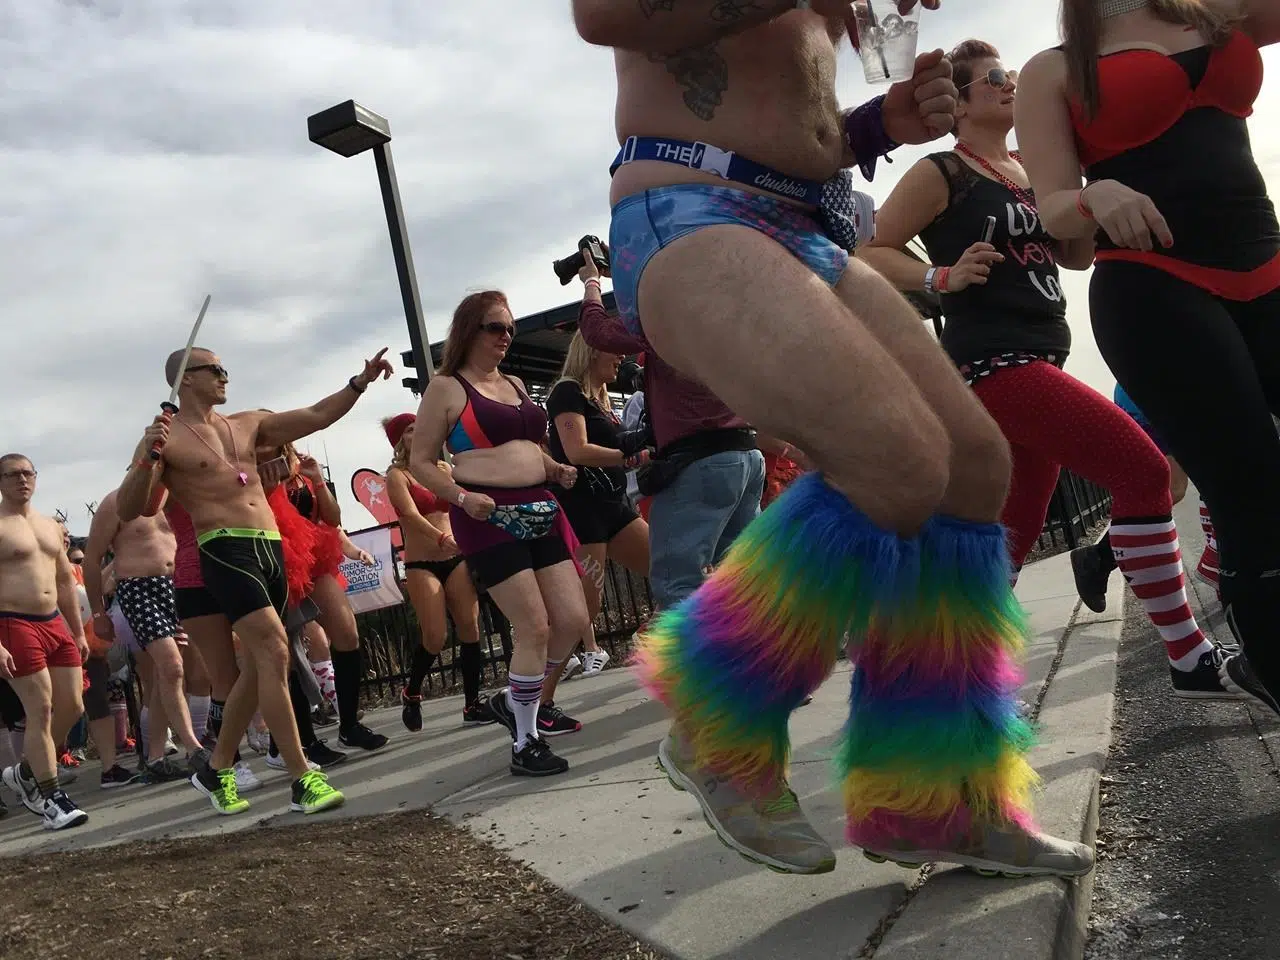 Pittsburgh's Cupid's Undie Run raises money for neurofibromatosis